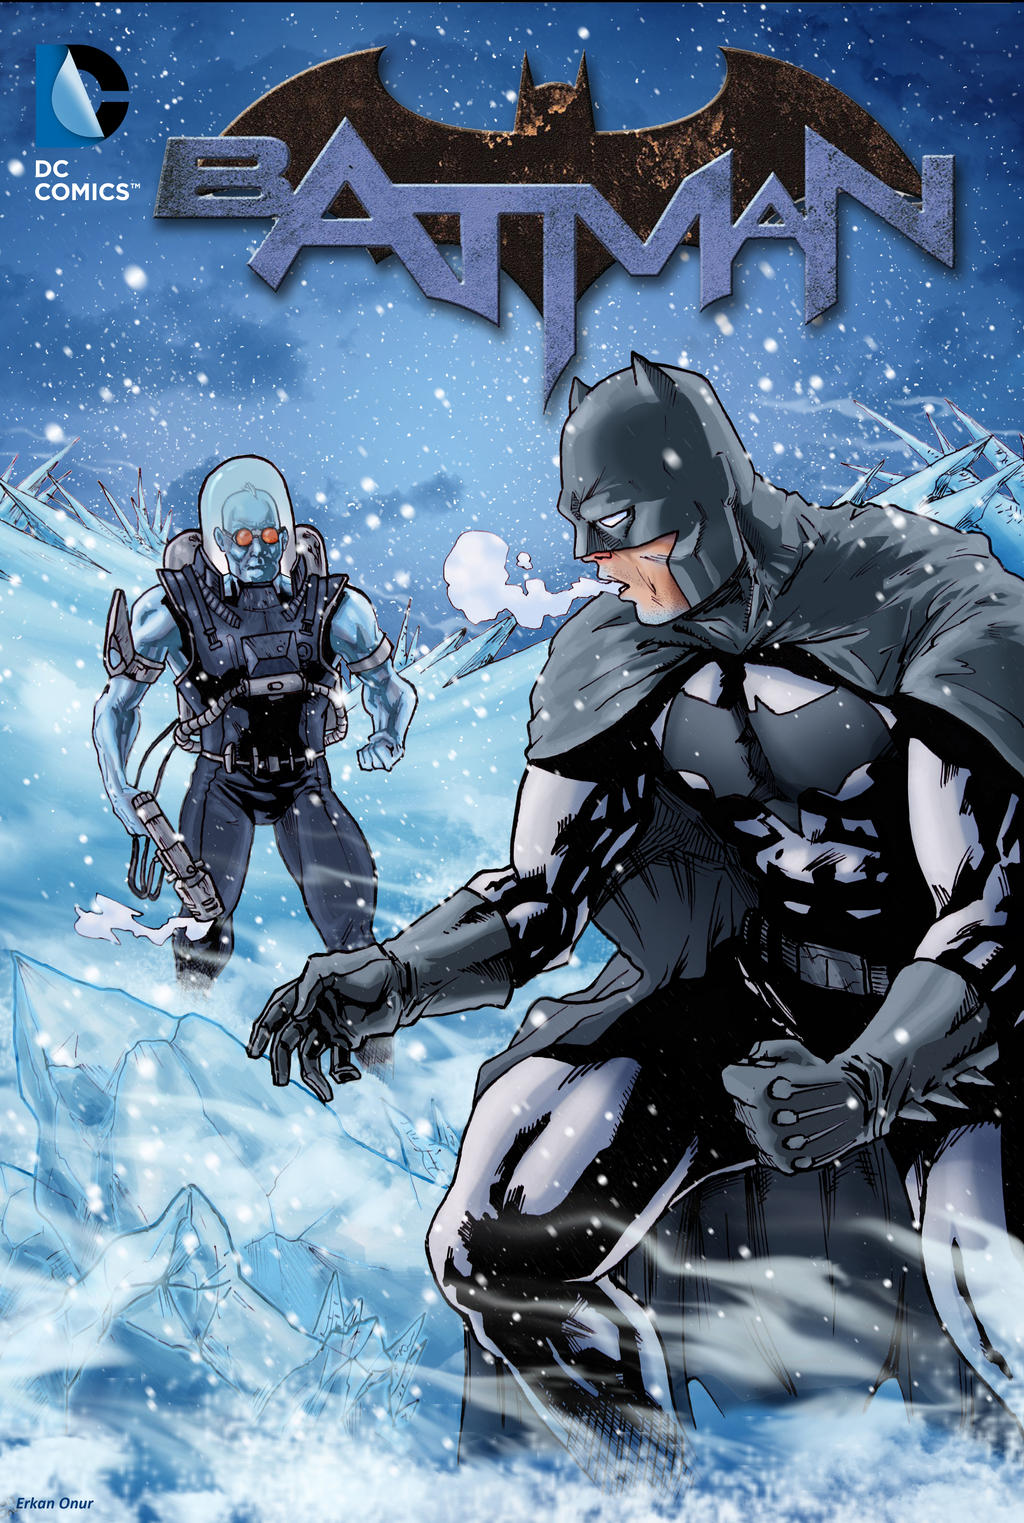 Batman vs Mr. Freeze variant cover by sonicboom35 on DeviantArt